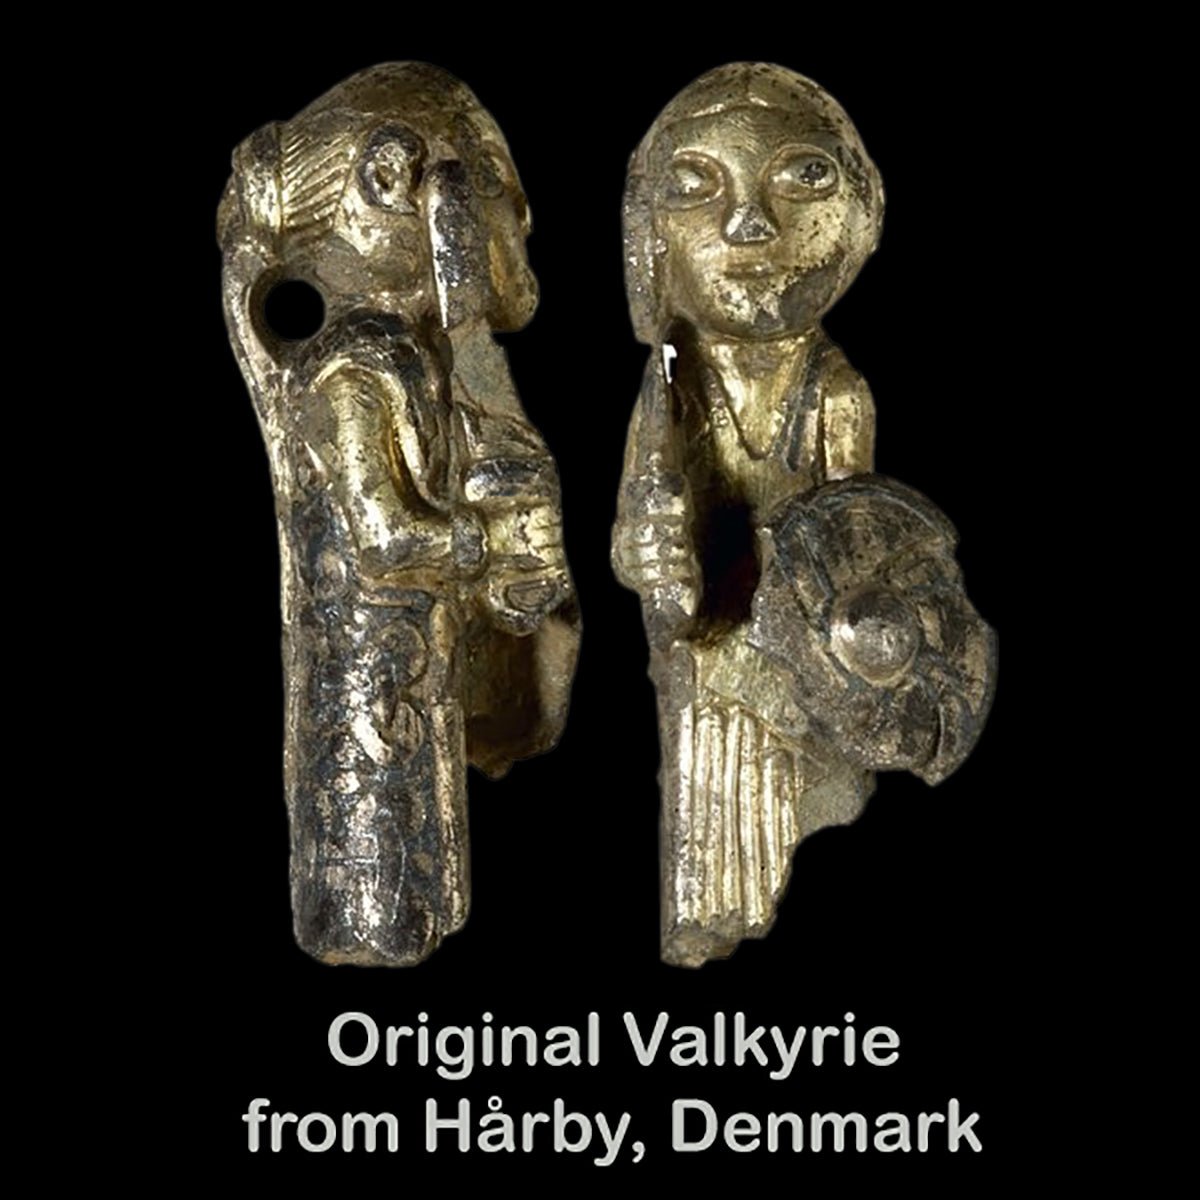 Original Valkyrie from Hårby, Funen, Denmark